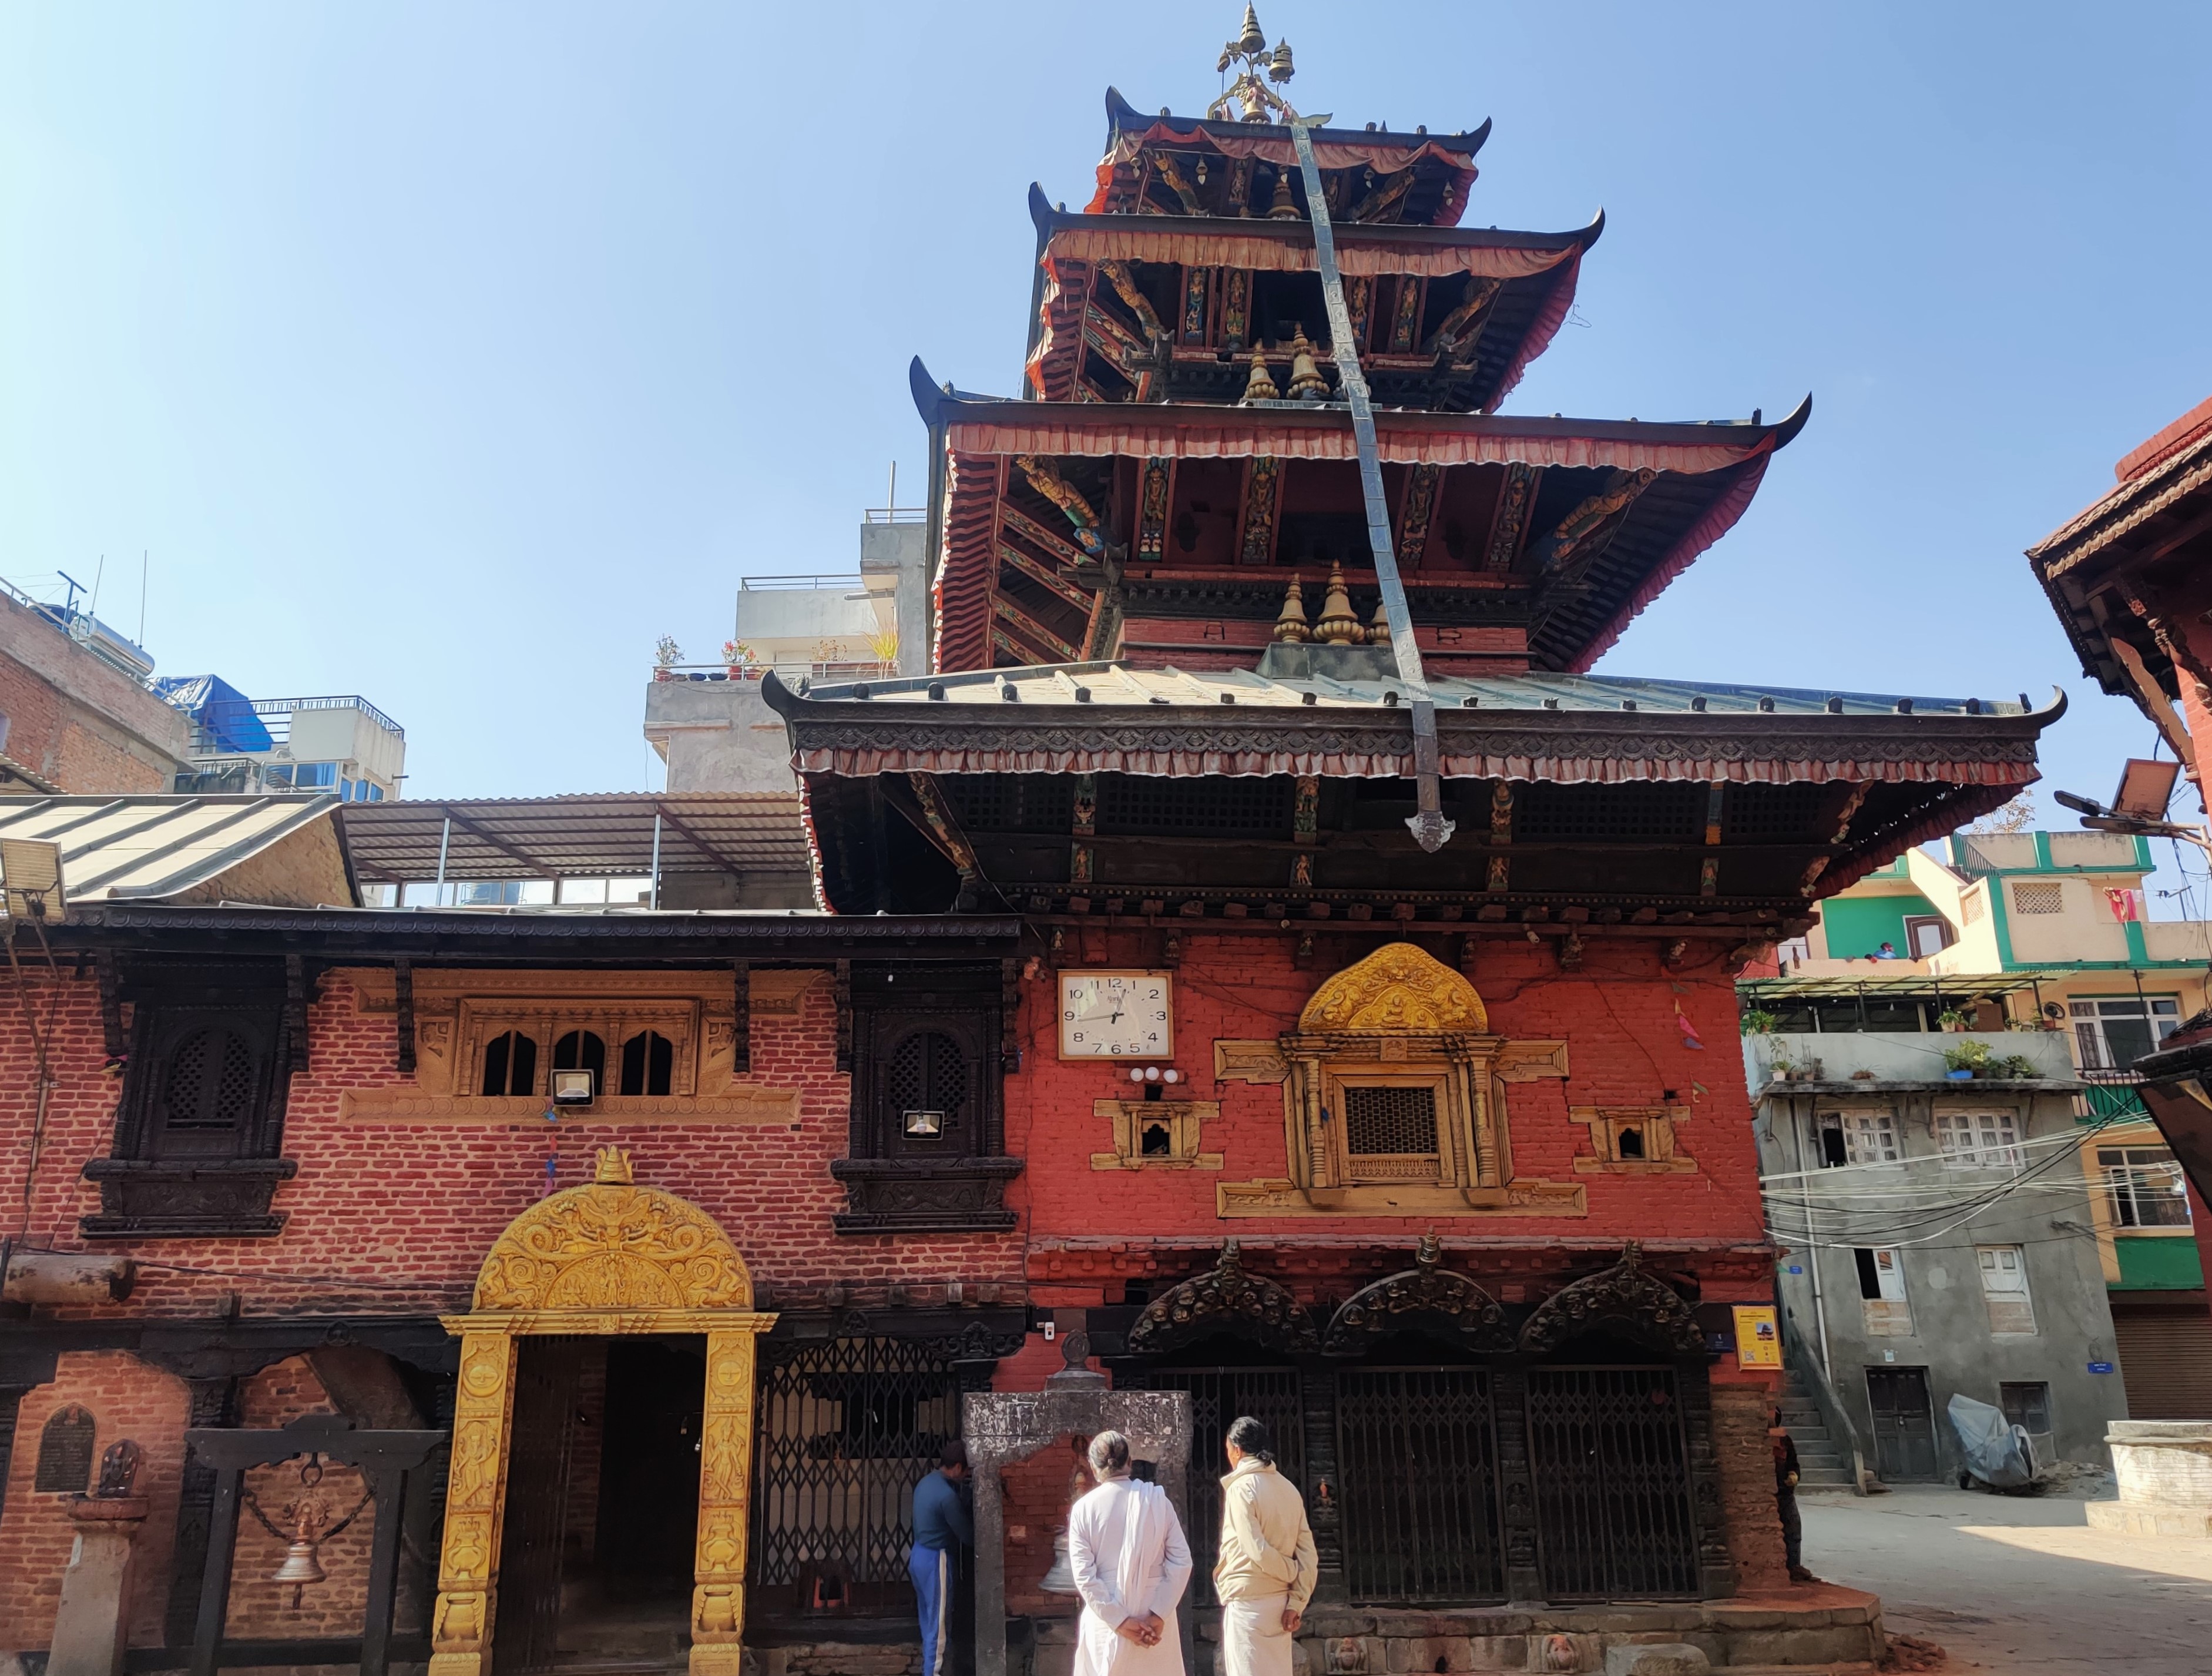 Newa settlements’ lesser-known charms beyond Kathmandu